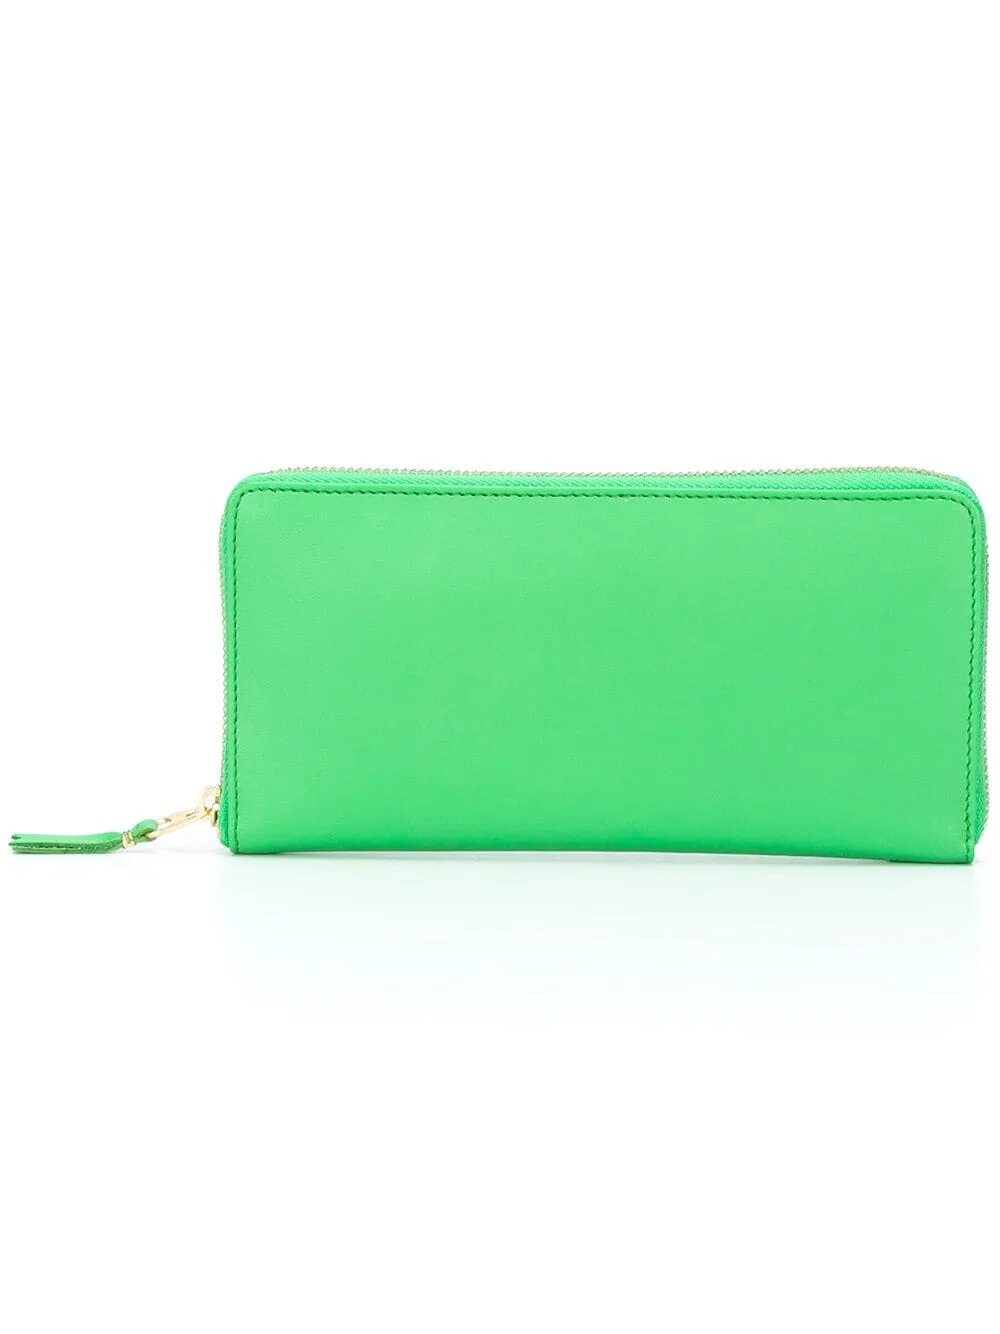 Зеленый кошелек. Салатовый кошелек. Кошелёк зелёного цвета. Женский кошелек - зеленый.